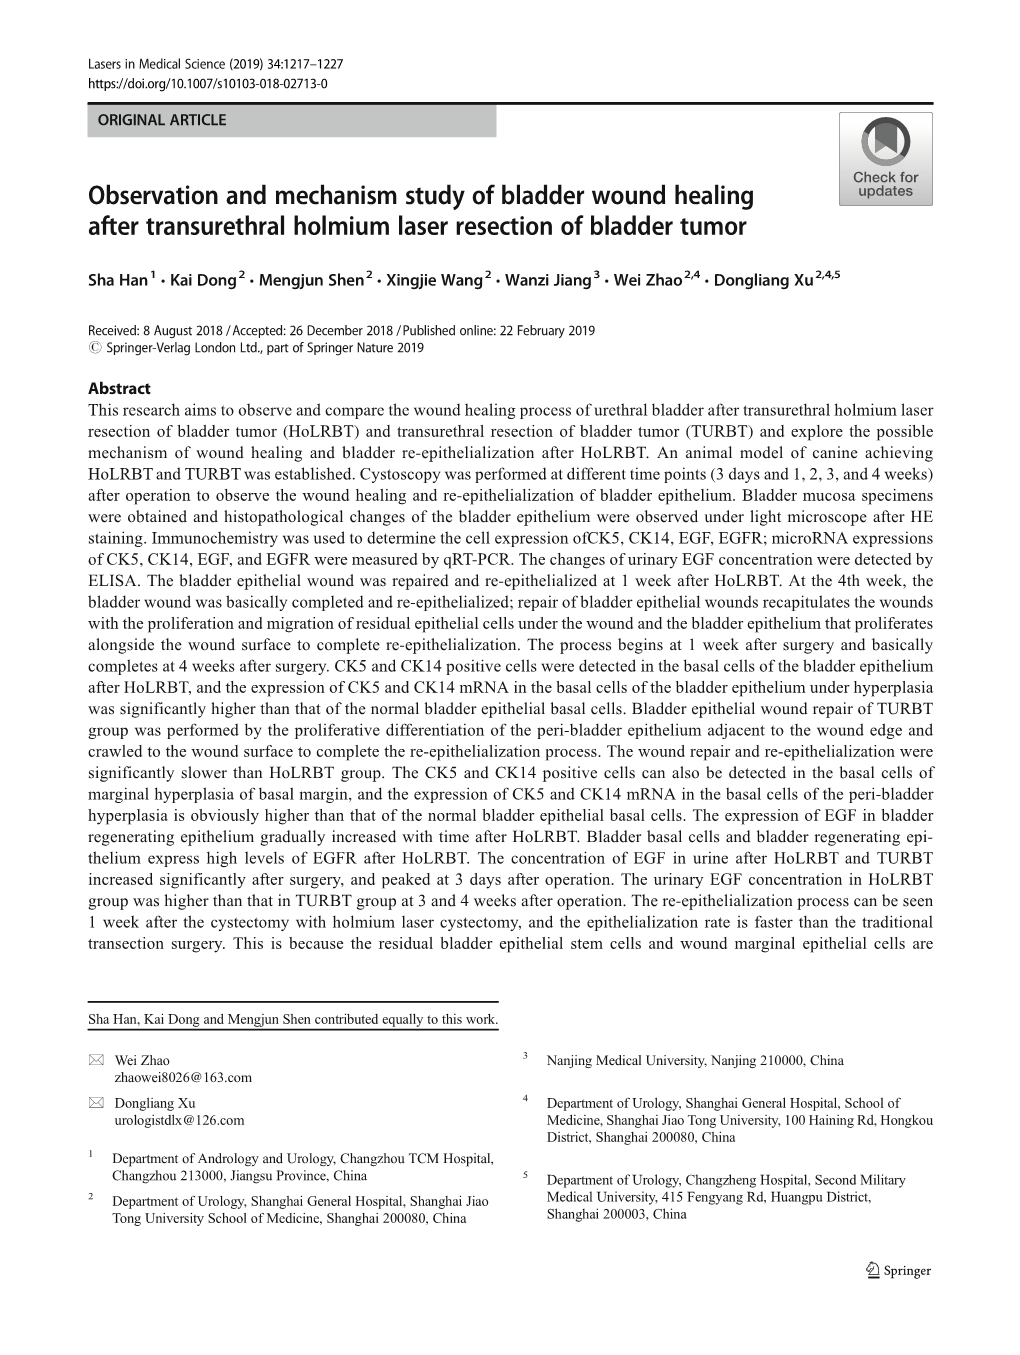 Observation and Mechanism Study of Bladder Wound Healing After Transurethral Holmium Laser Resection of Bladder Tumor